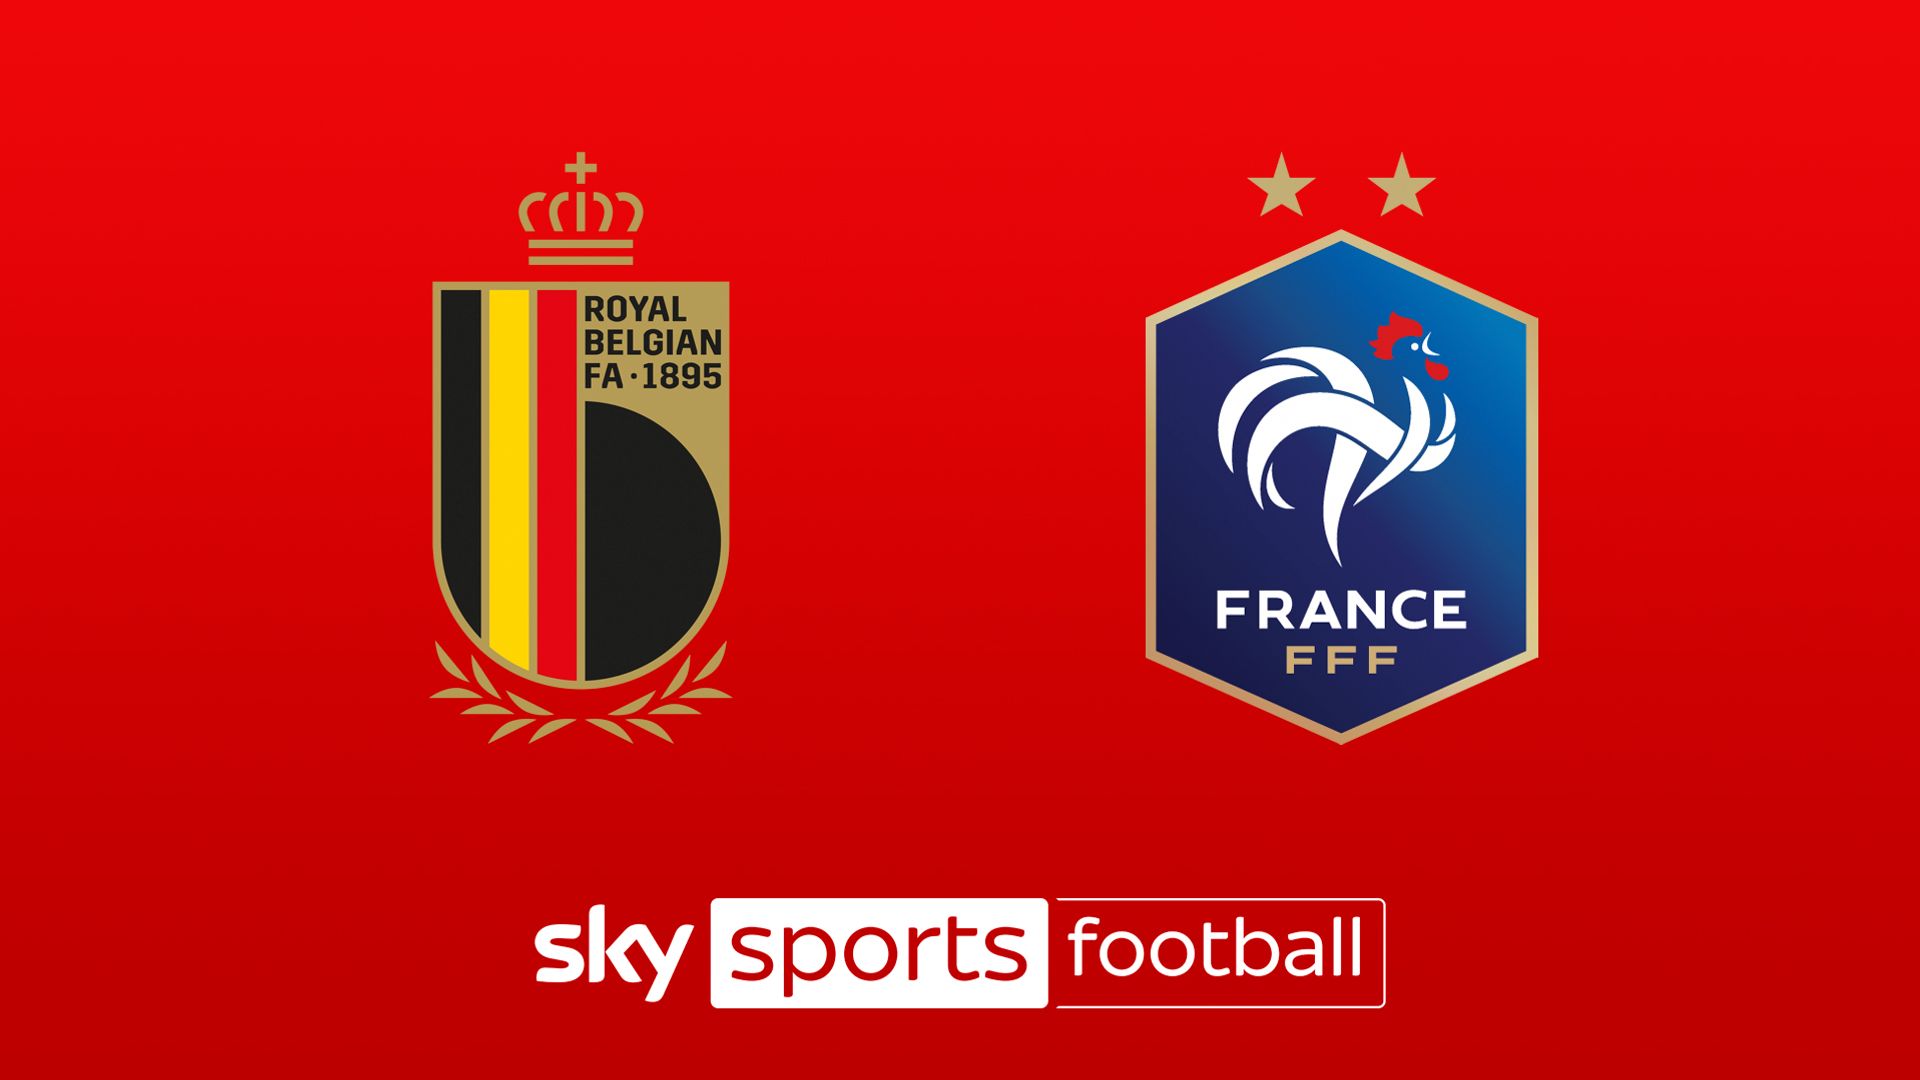 Belgium vs France on Sky: Hazard ready to make real impact again